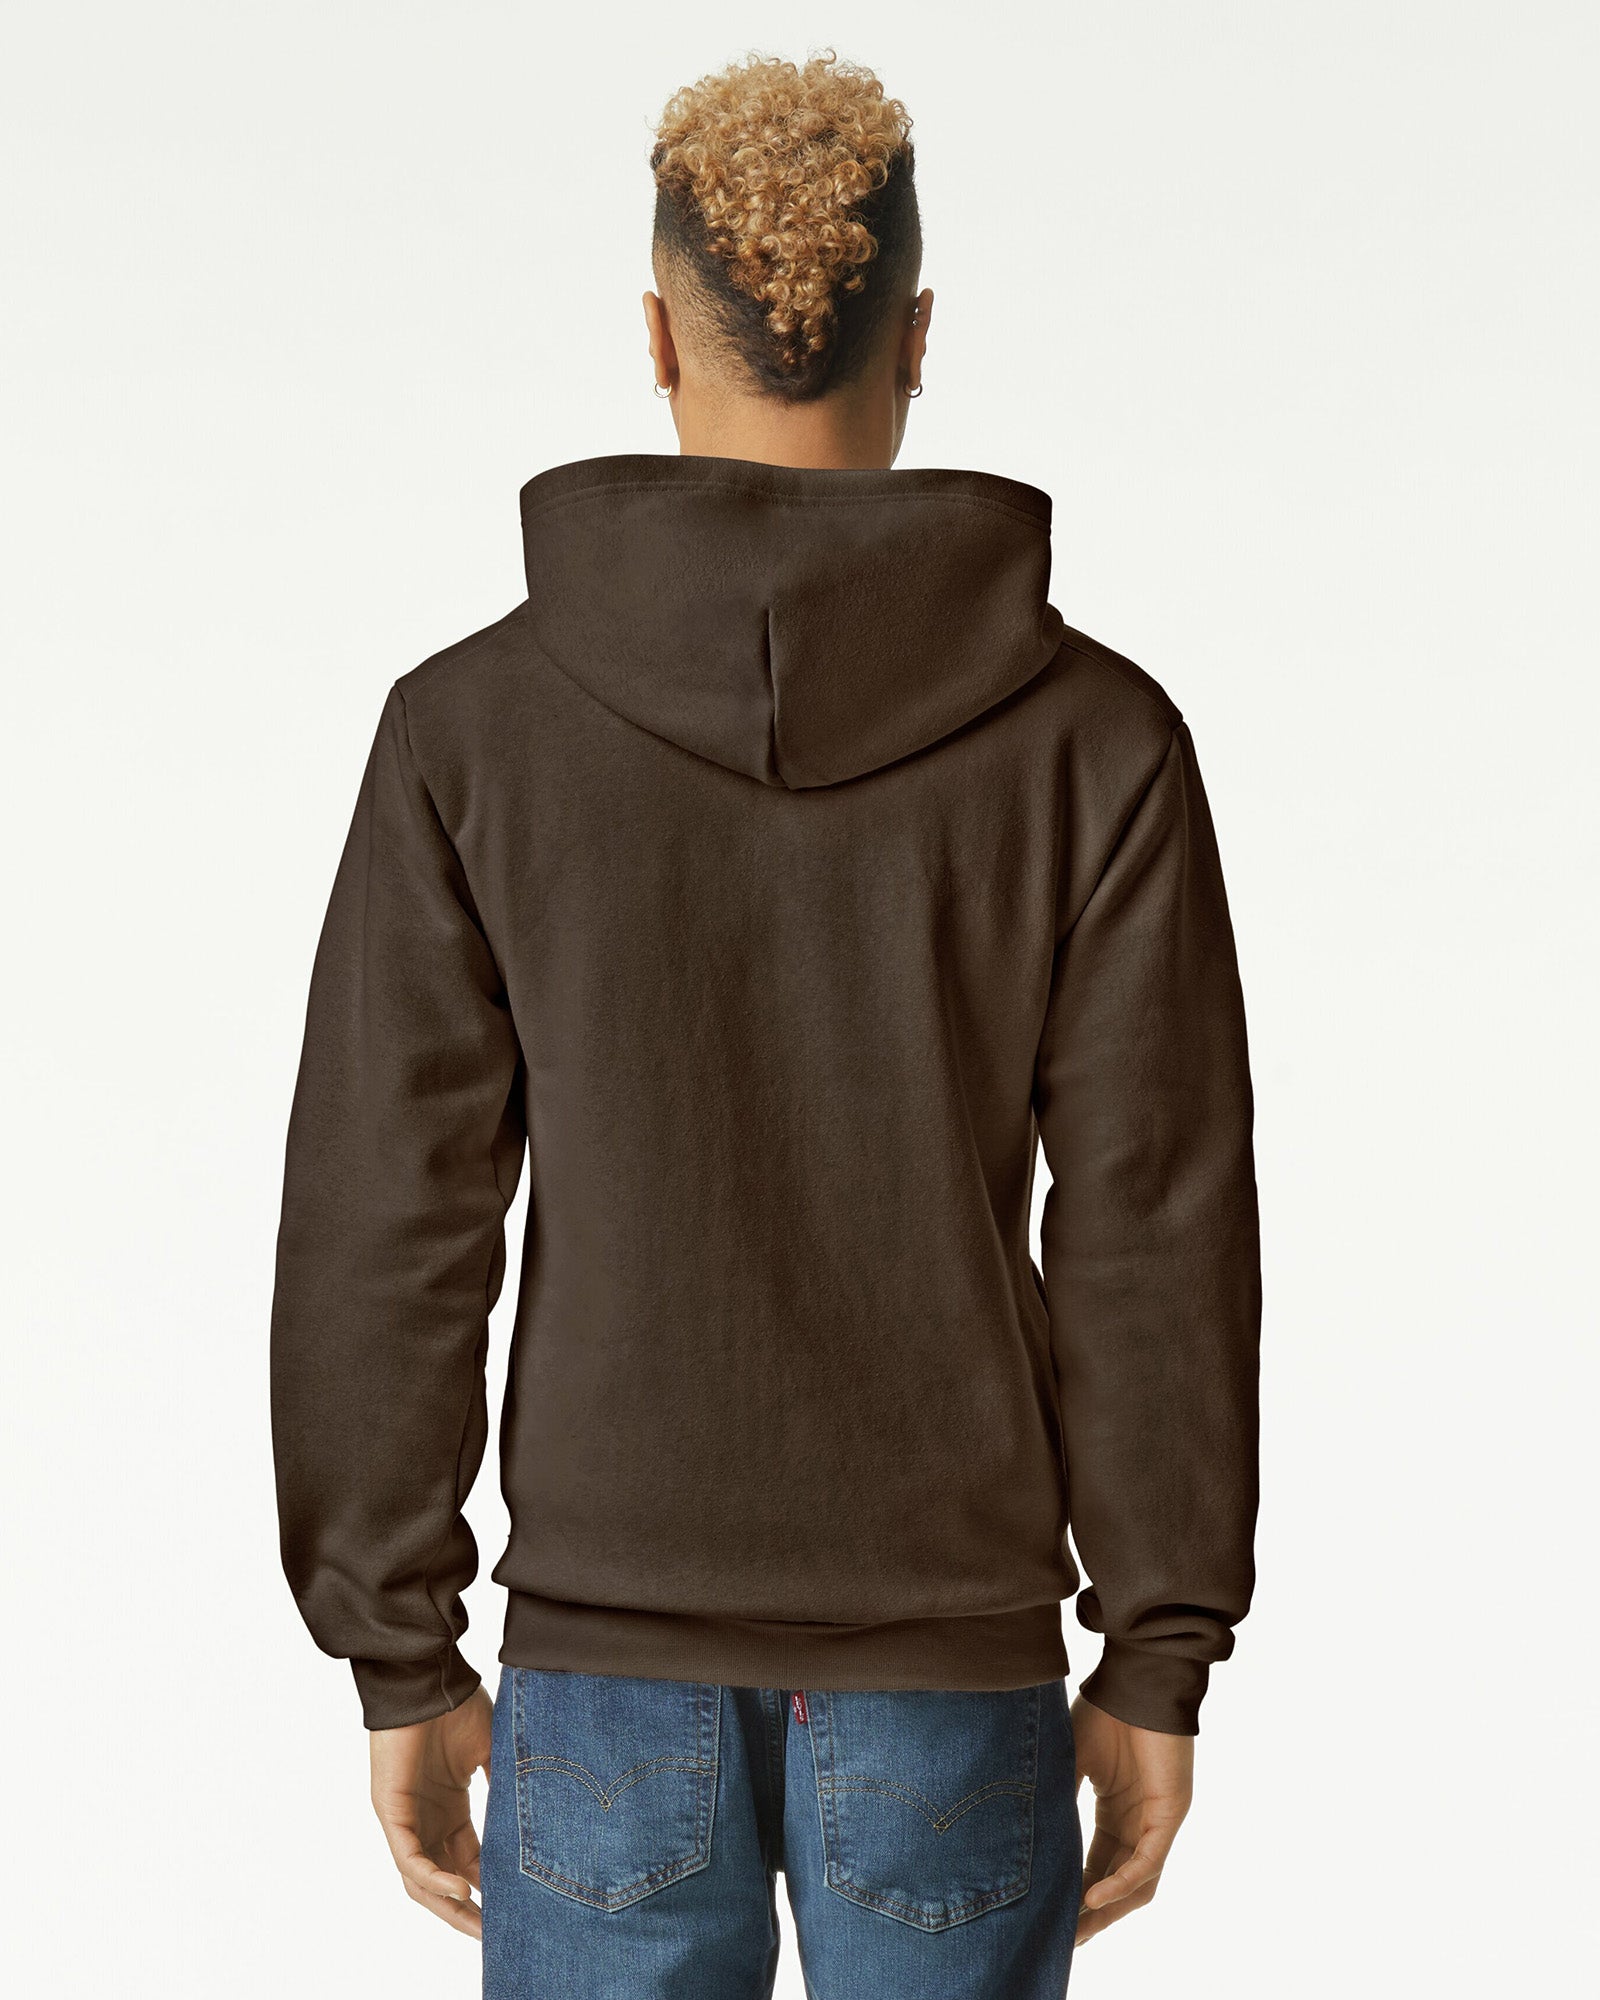 Reflex Unisex Full Zip Hooded Sweatshirt